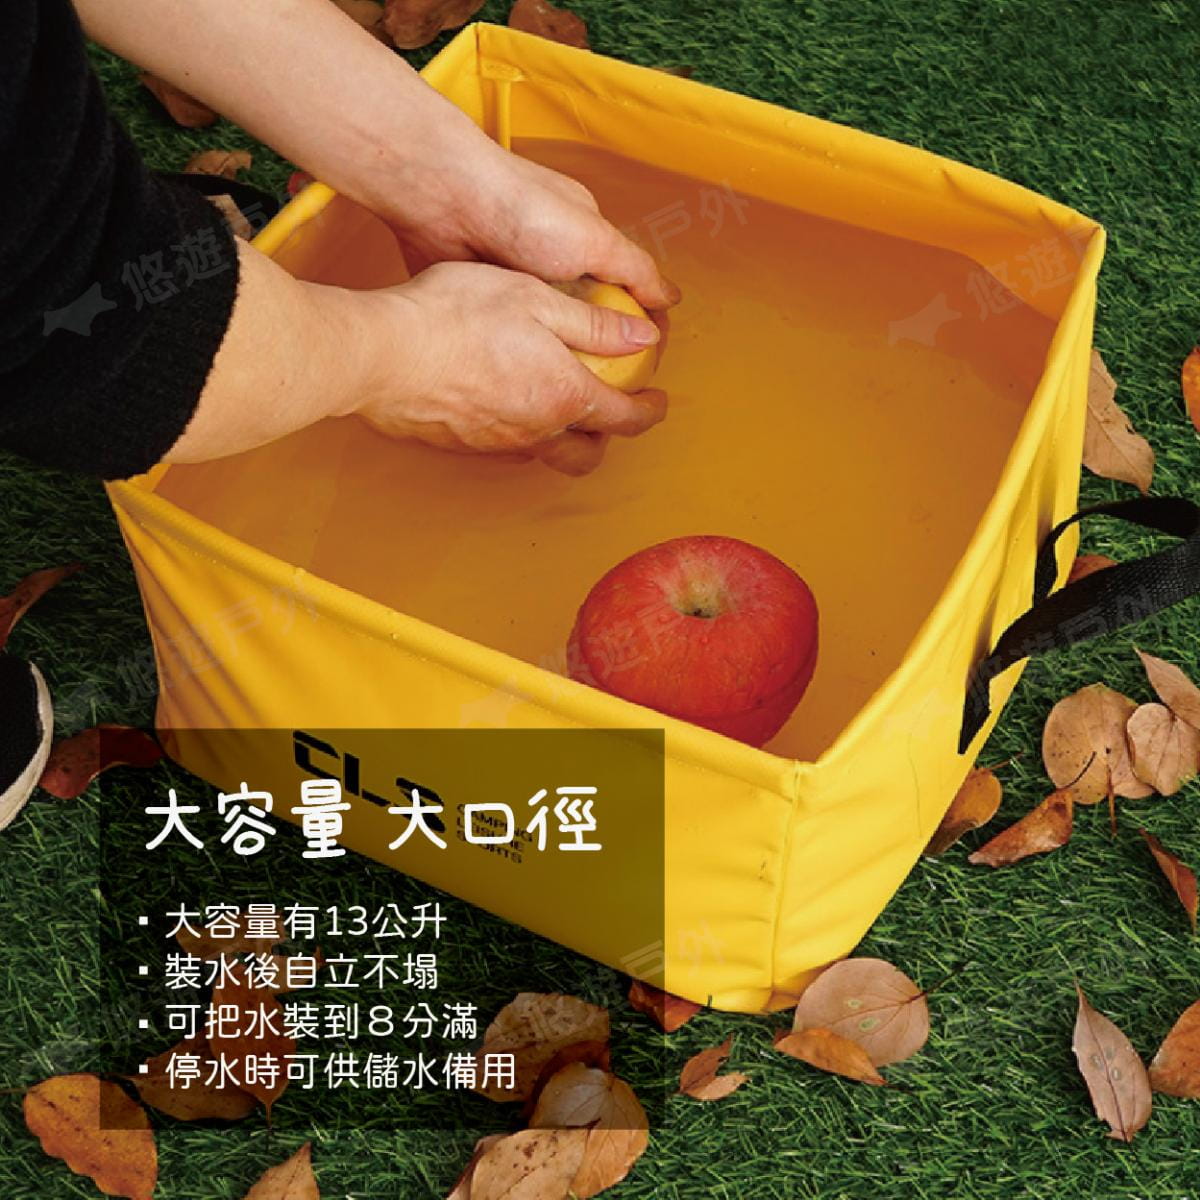 【CLS】韓國 戶外 多功能 方形折疊水桶 儲水盆 水袋 五色可選 13L 應急儲水 環保防水材質 2